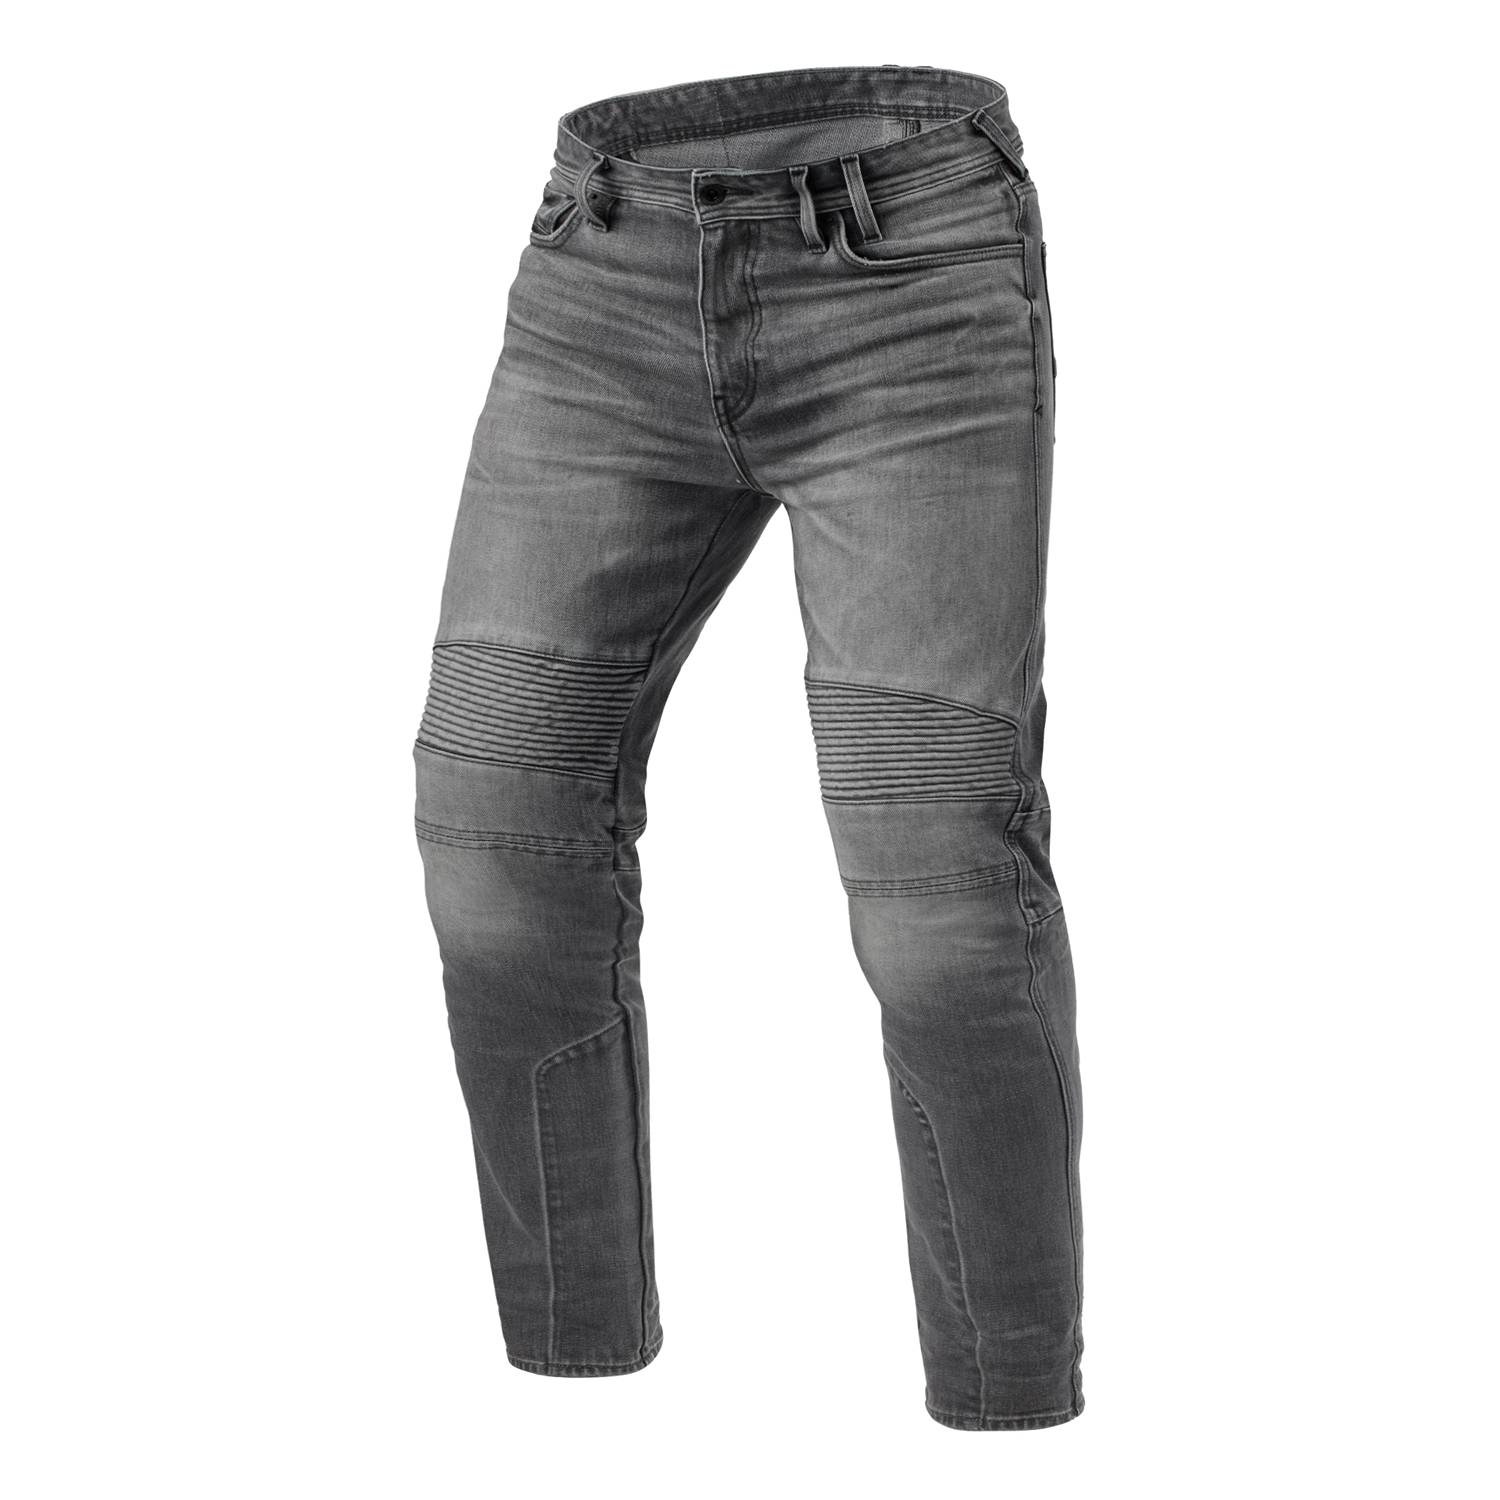 Image of REV'IT! Jeans Moto 2 TF Medium Grey Used L36 Motorcycle Jeans Talla L36/W32